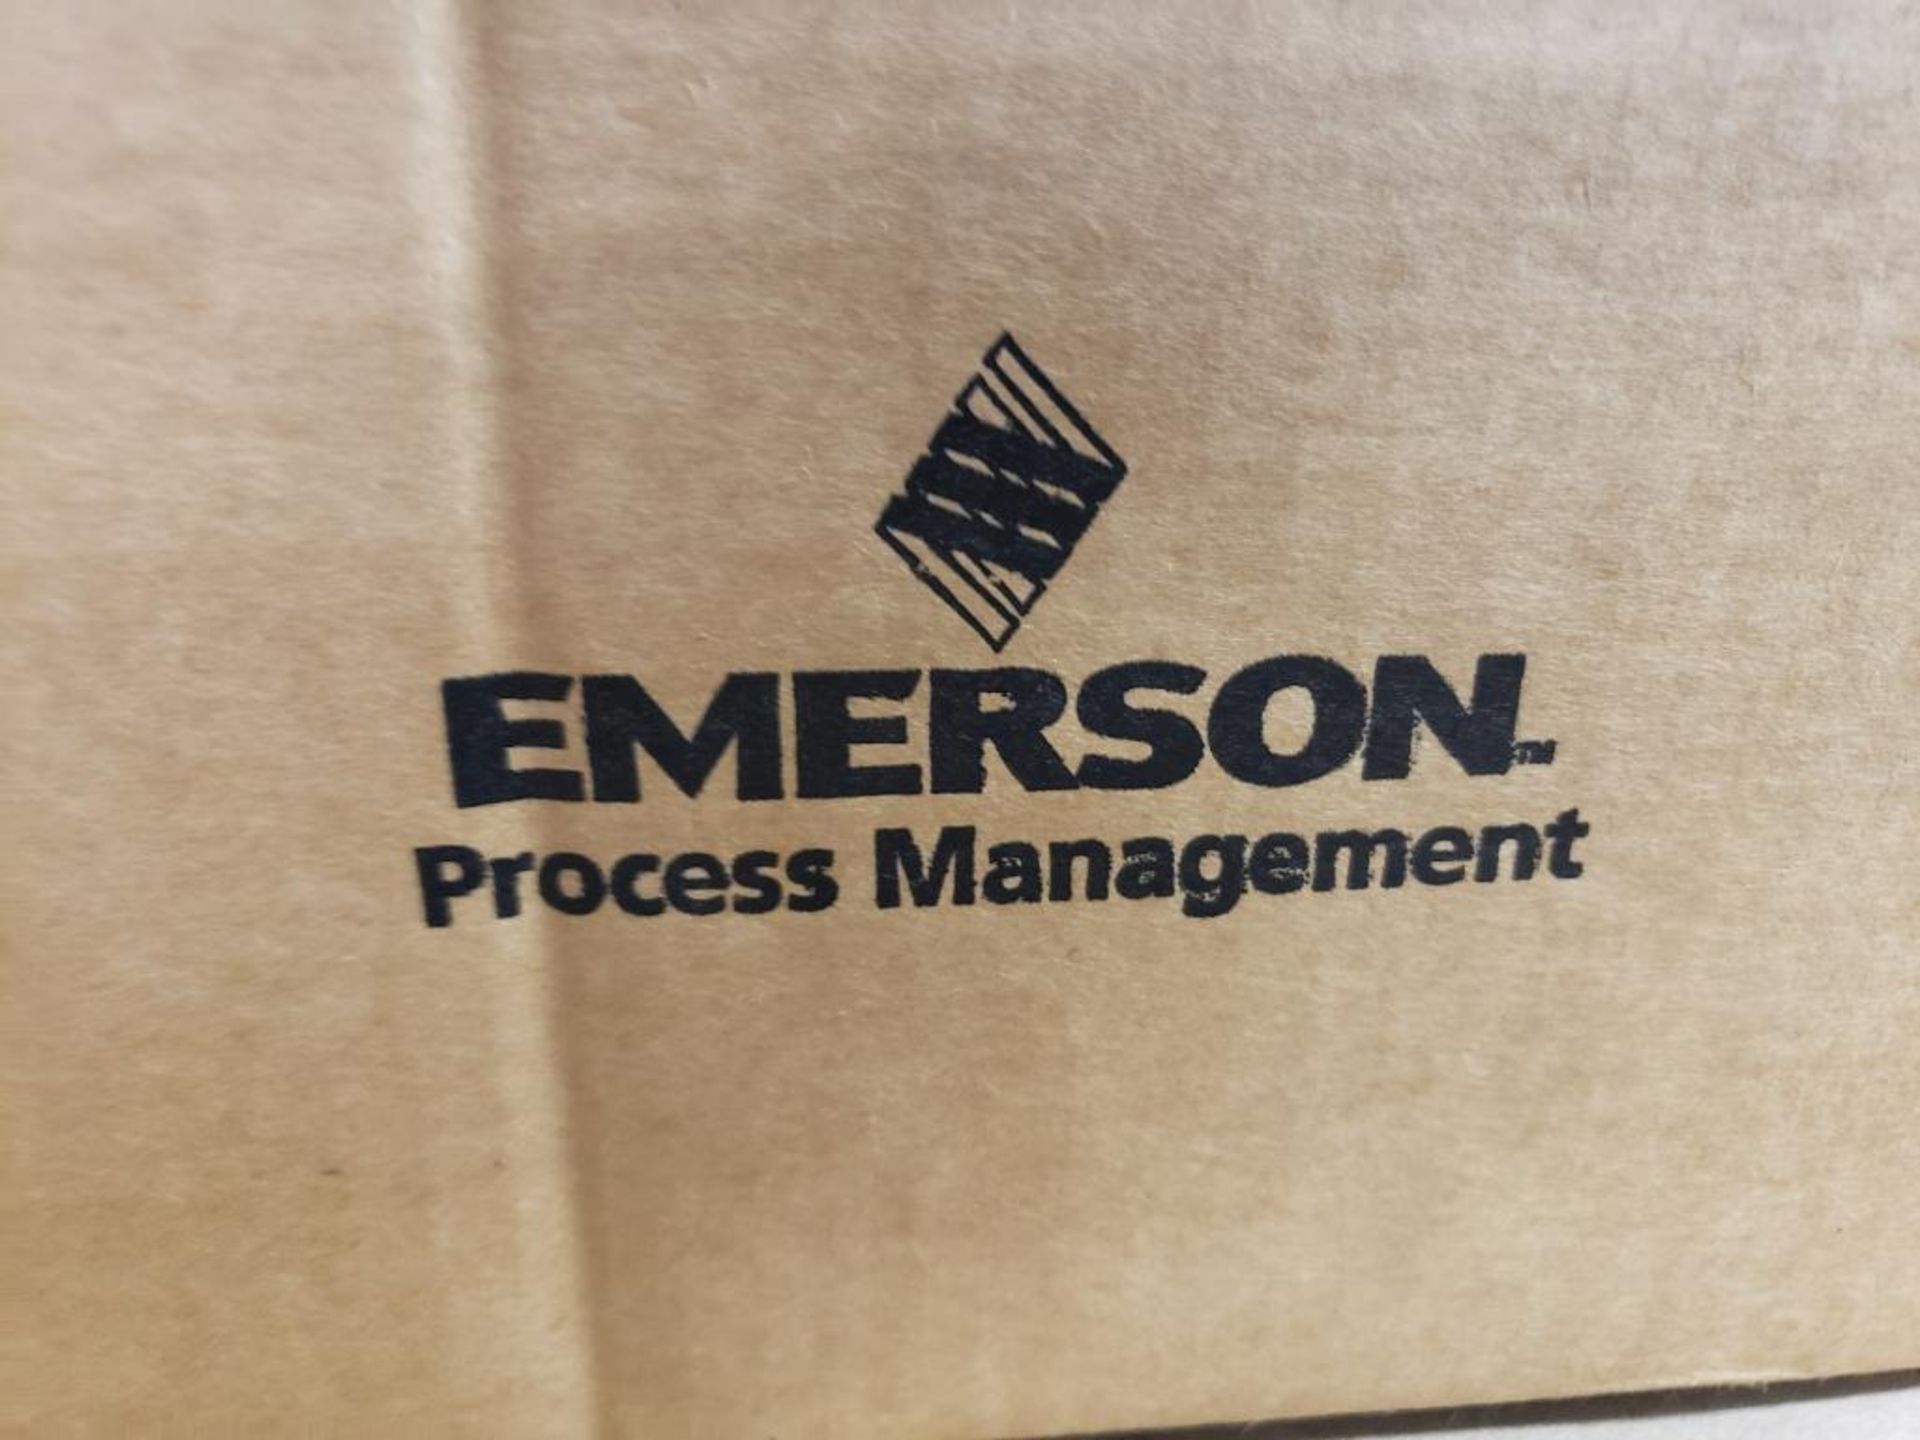 Emerson Bristol chart reader. 410887B02. New in box. - Image 3 of 5